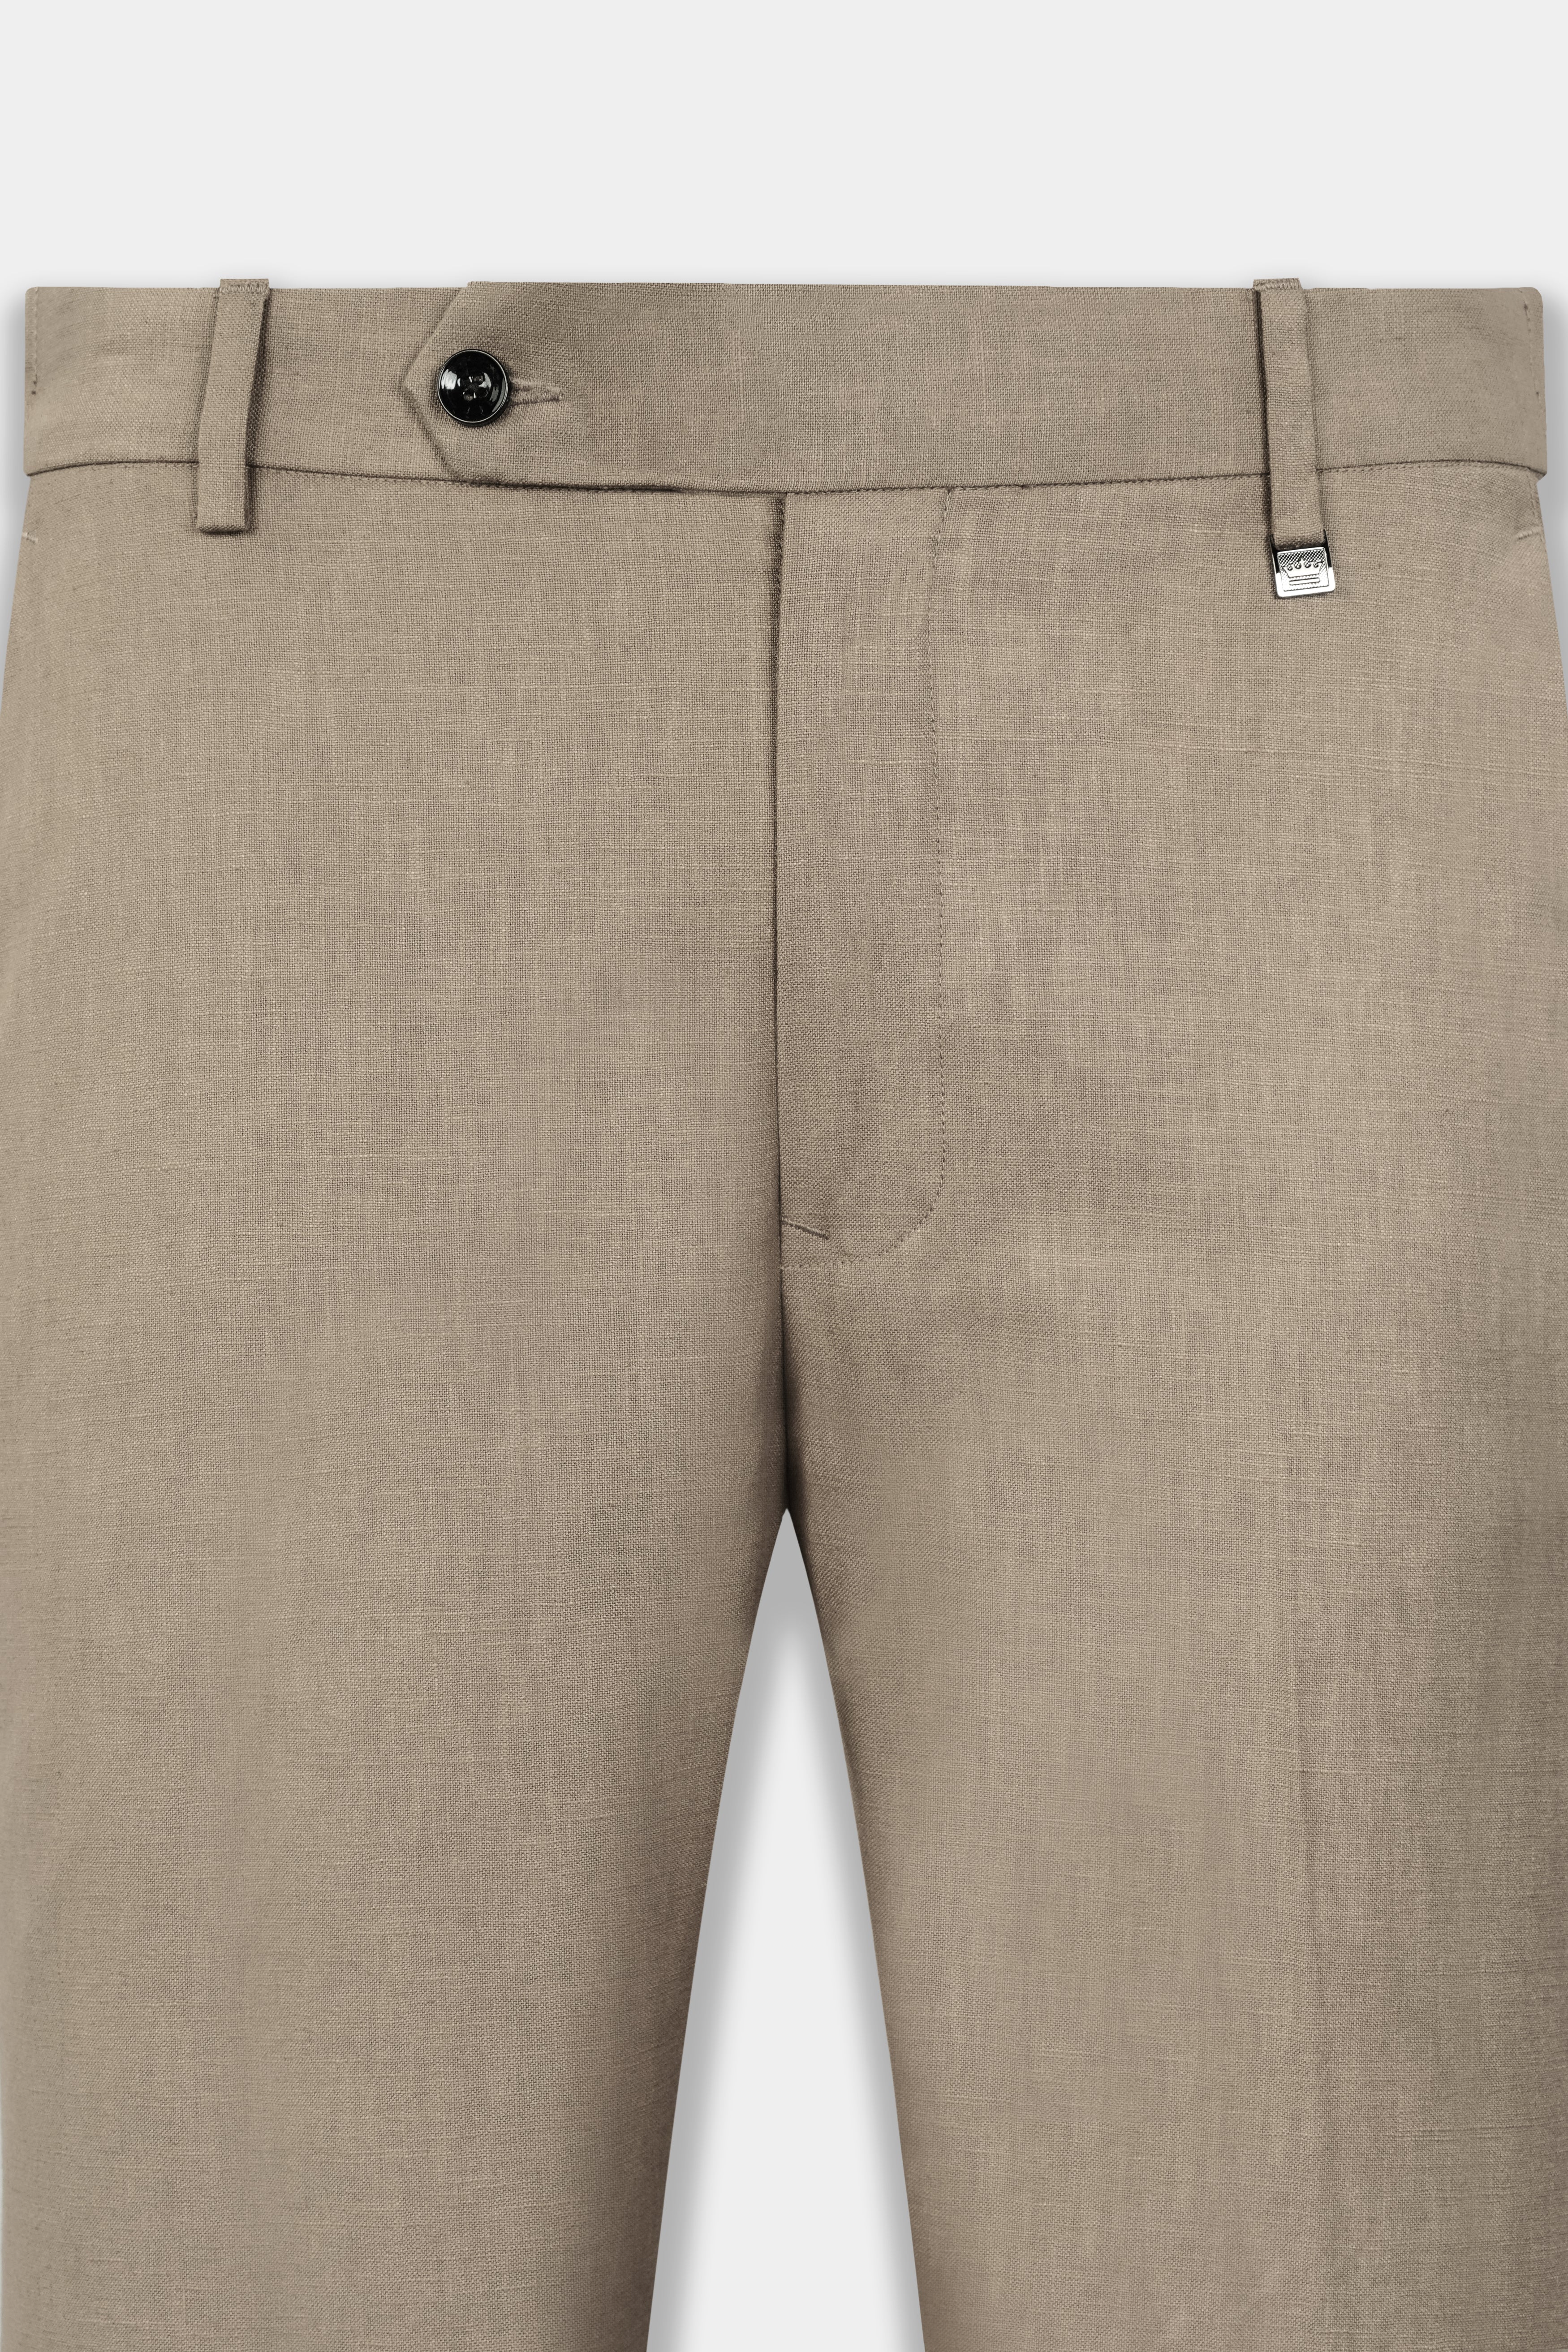 Mens Linen Trousers Beige, Linen Clothing Alexanders of London